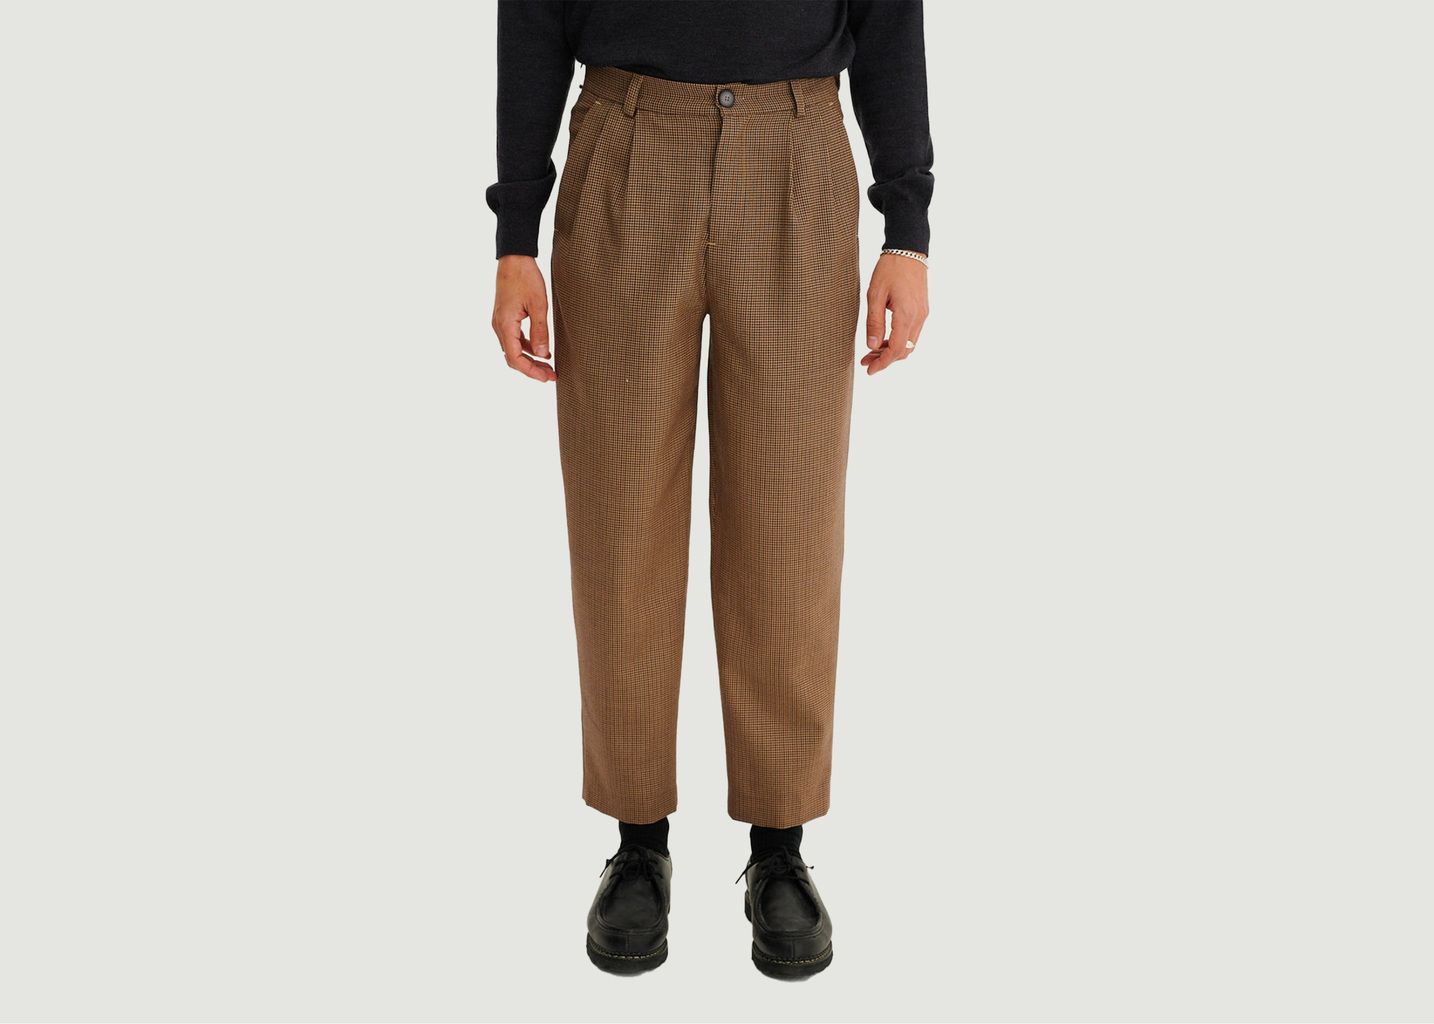 noyoco Cambridge Trousers